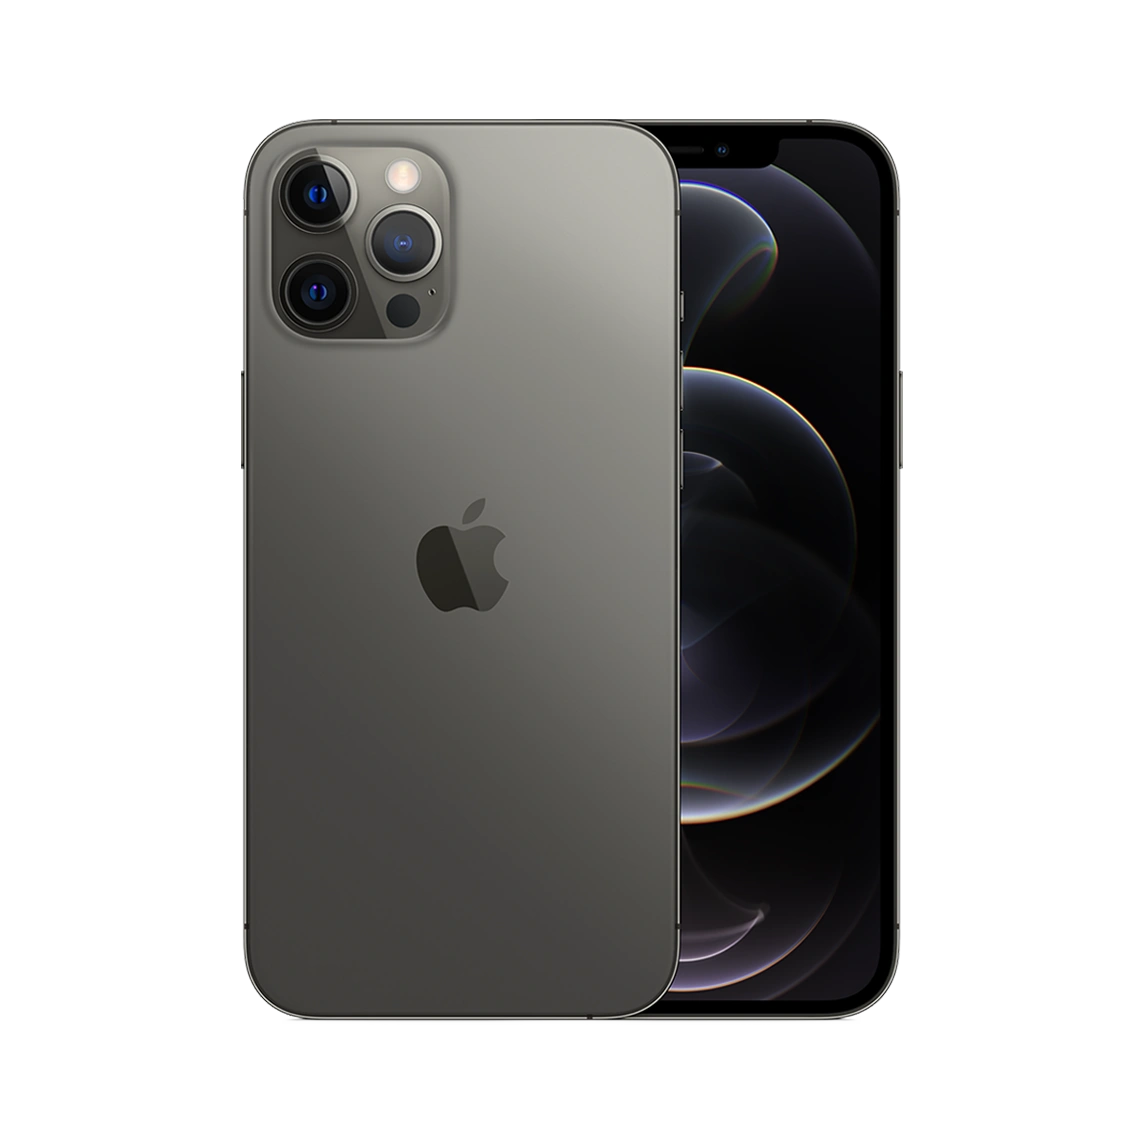 Apple iPhone 12 Pro 256GB